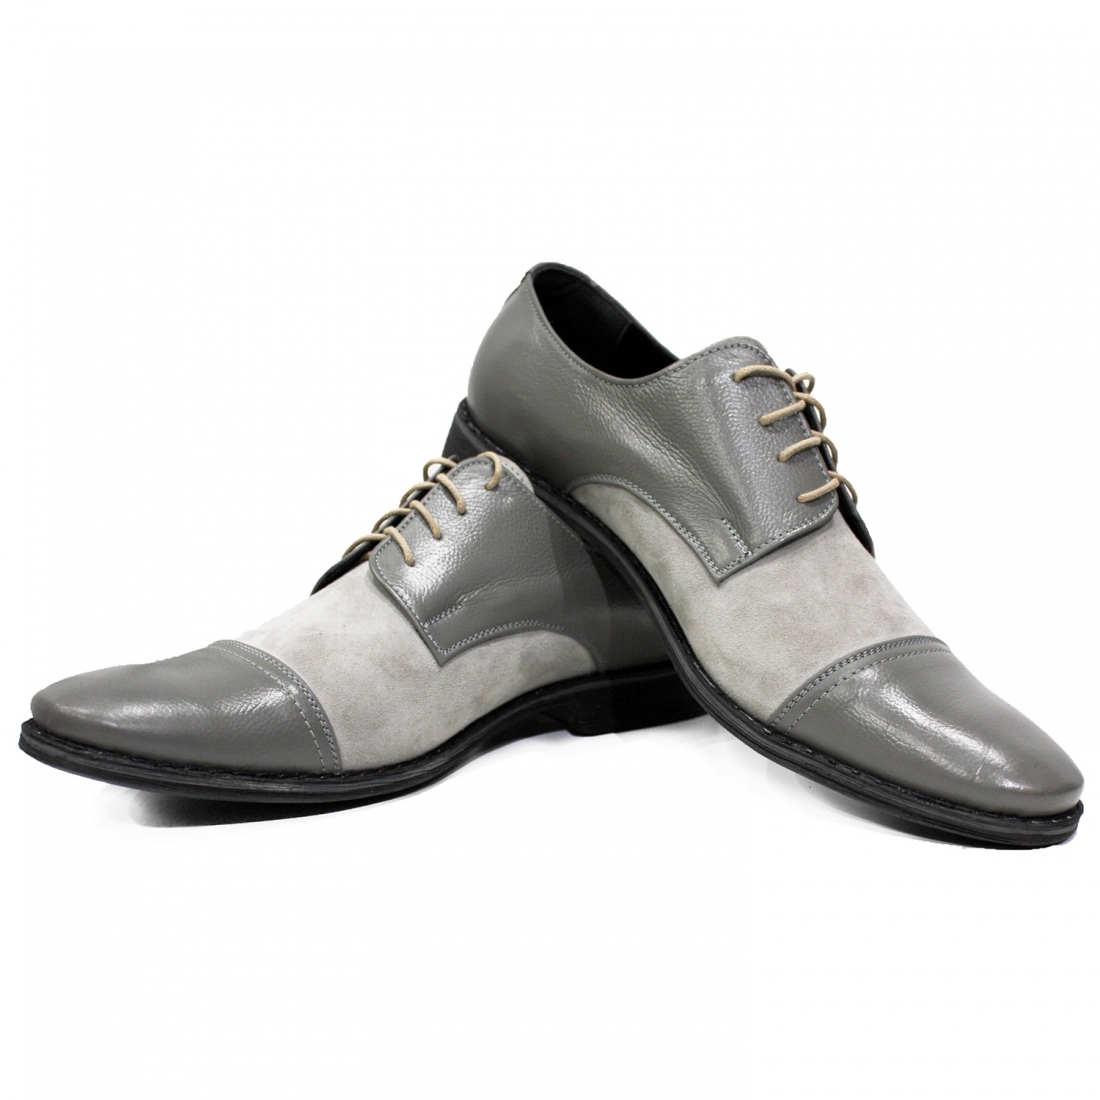 Modello Nuizzerro - Chaussure Classique - Handmade Colorful Italian Leather Shoes